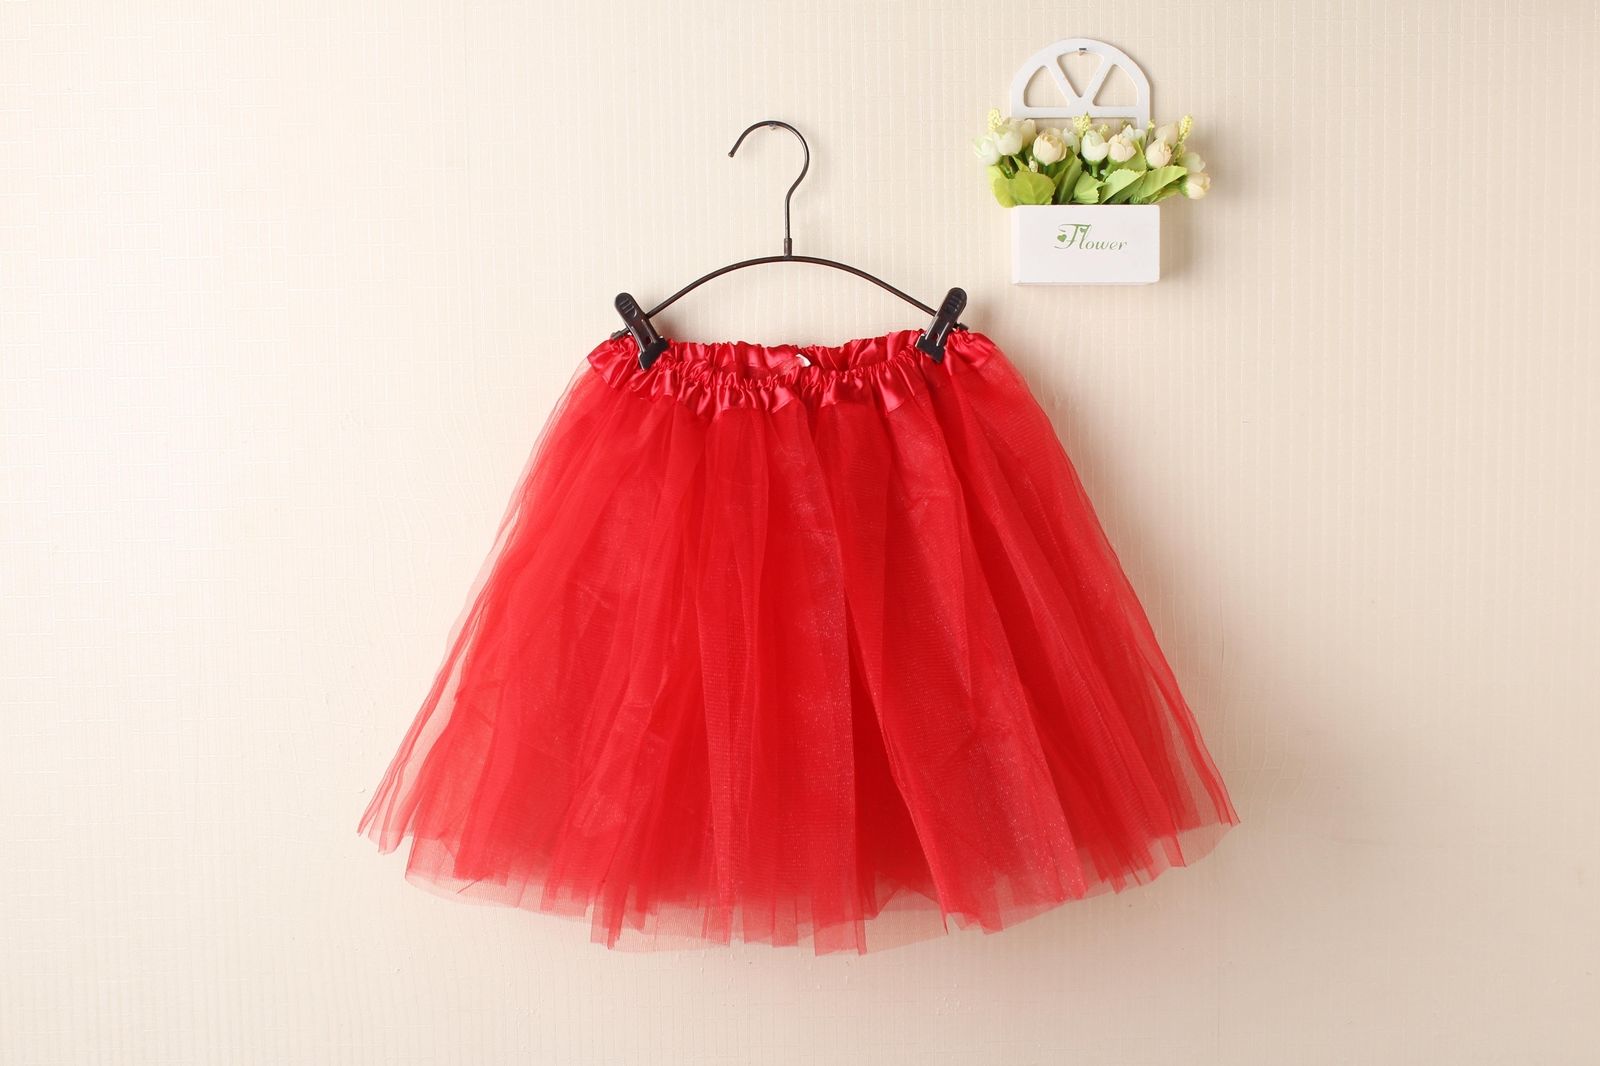 New Kids Tutu Skirt Baby Princess Dressup Party Girls Costume Ballet Dance Wear, Red, Kids